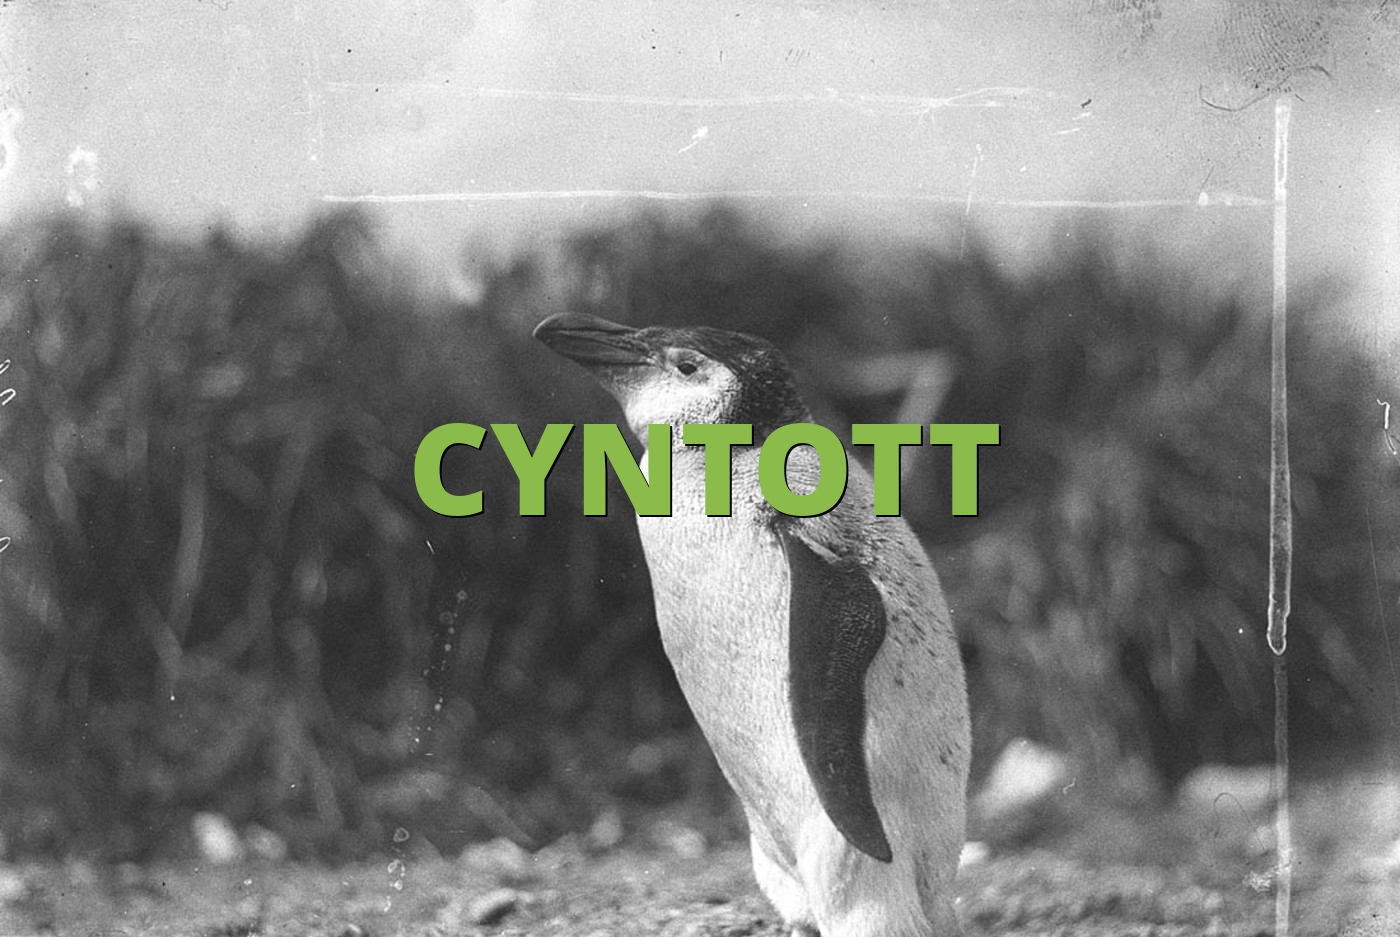 CYNTOTT